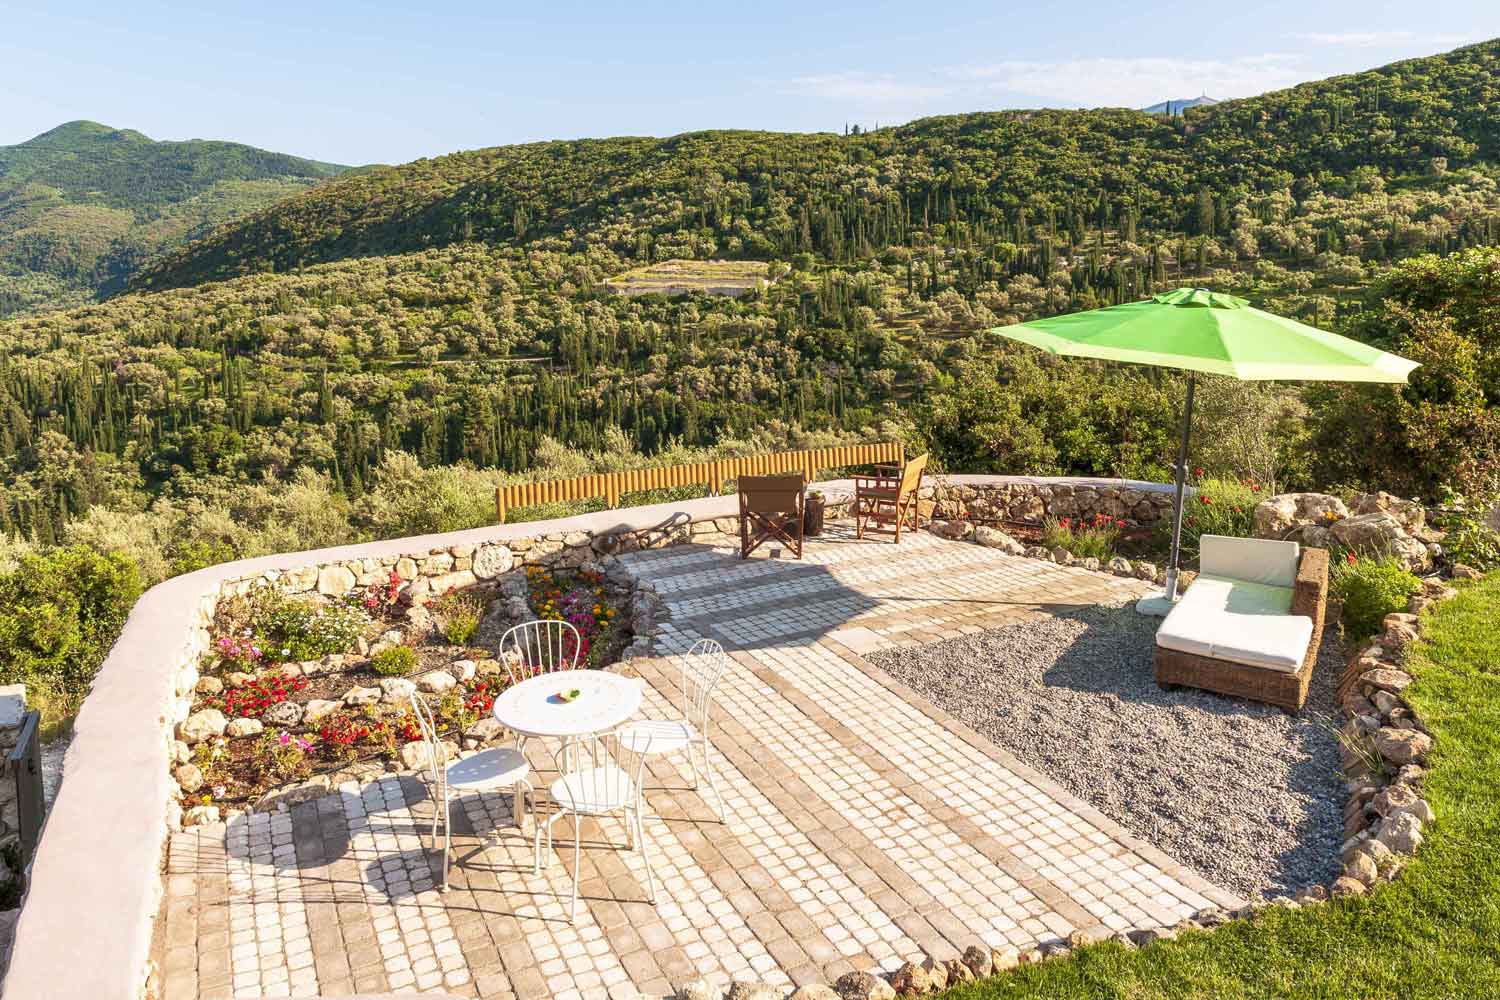 private pool villa for couples, perfect surrounding landscape